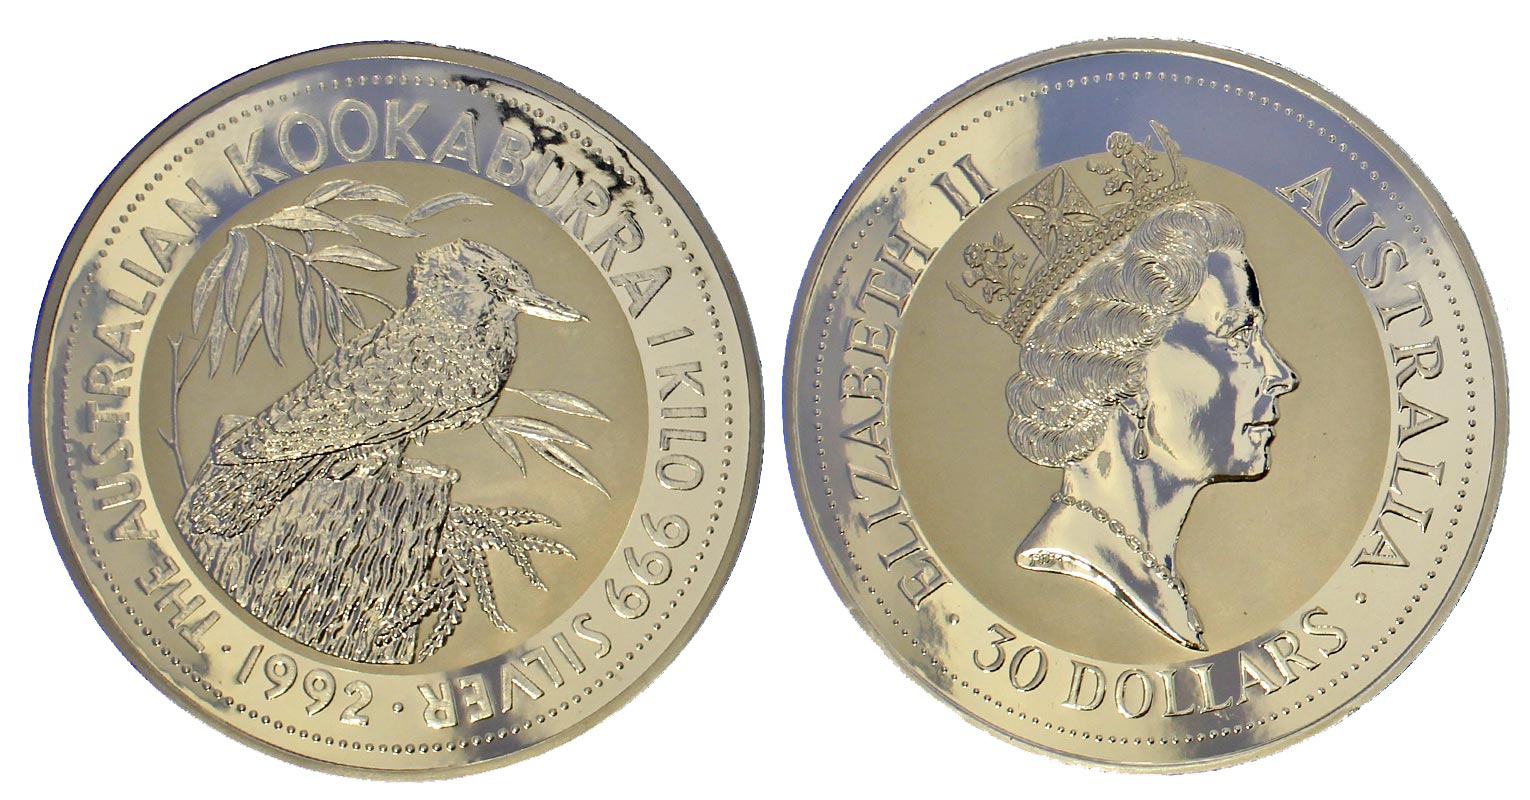 Kookaburra - 30 dollari gr.1000,00 in argento 999/000 in confezione originale